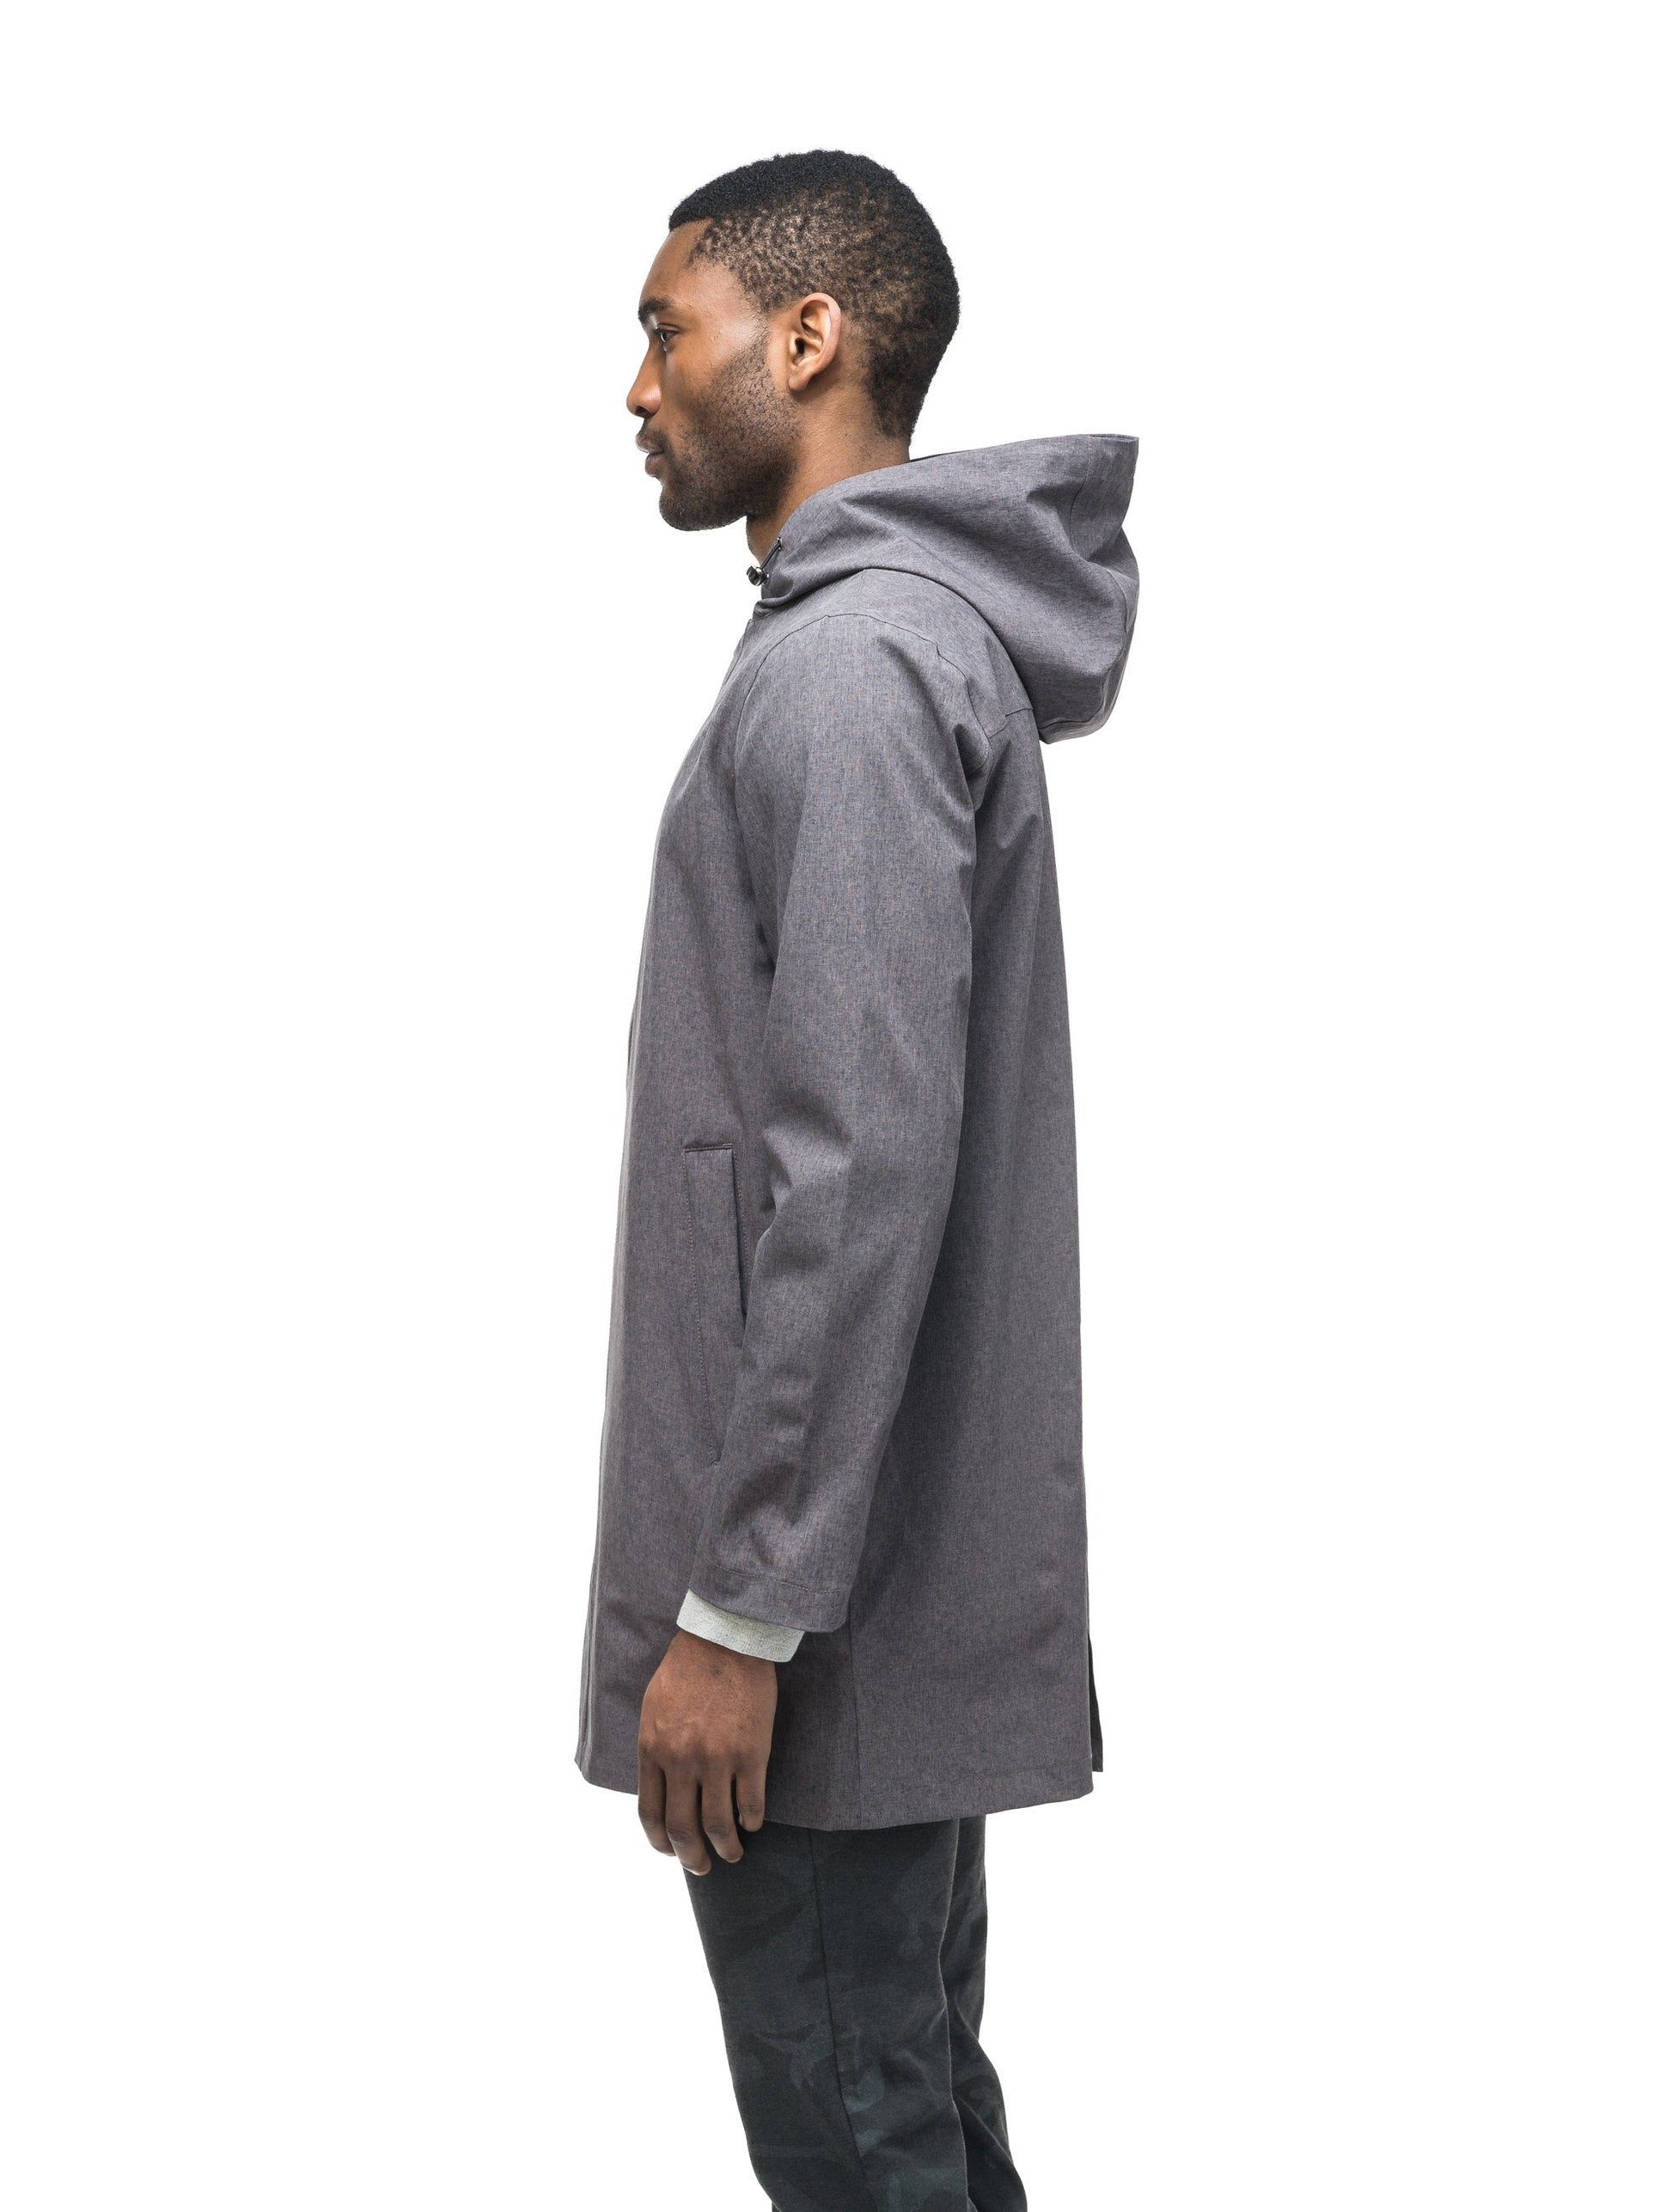 Men's thigh length rain coat with hood in Dk Grey